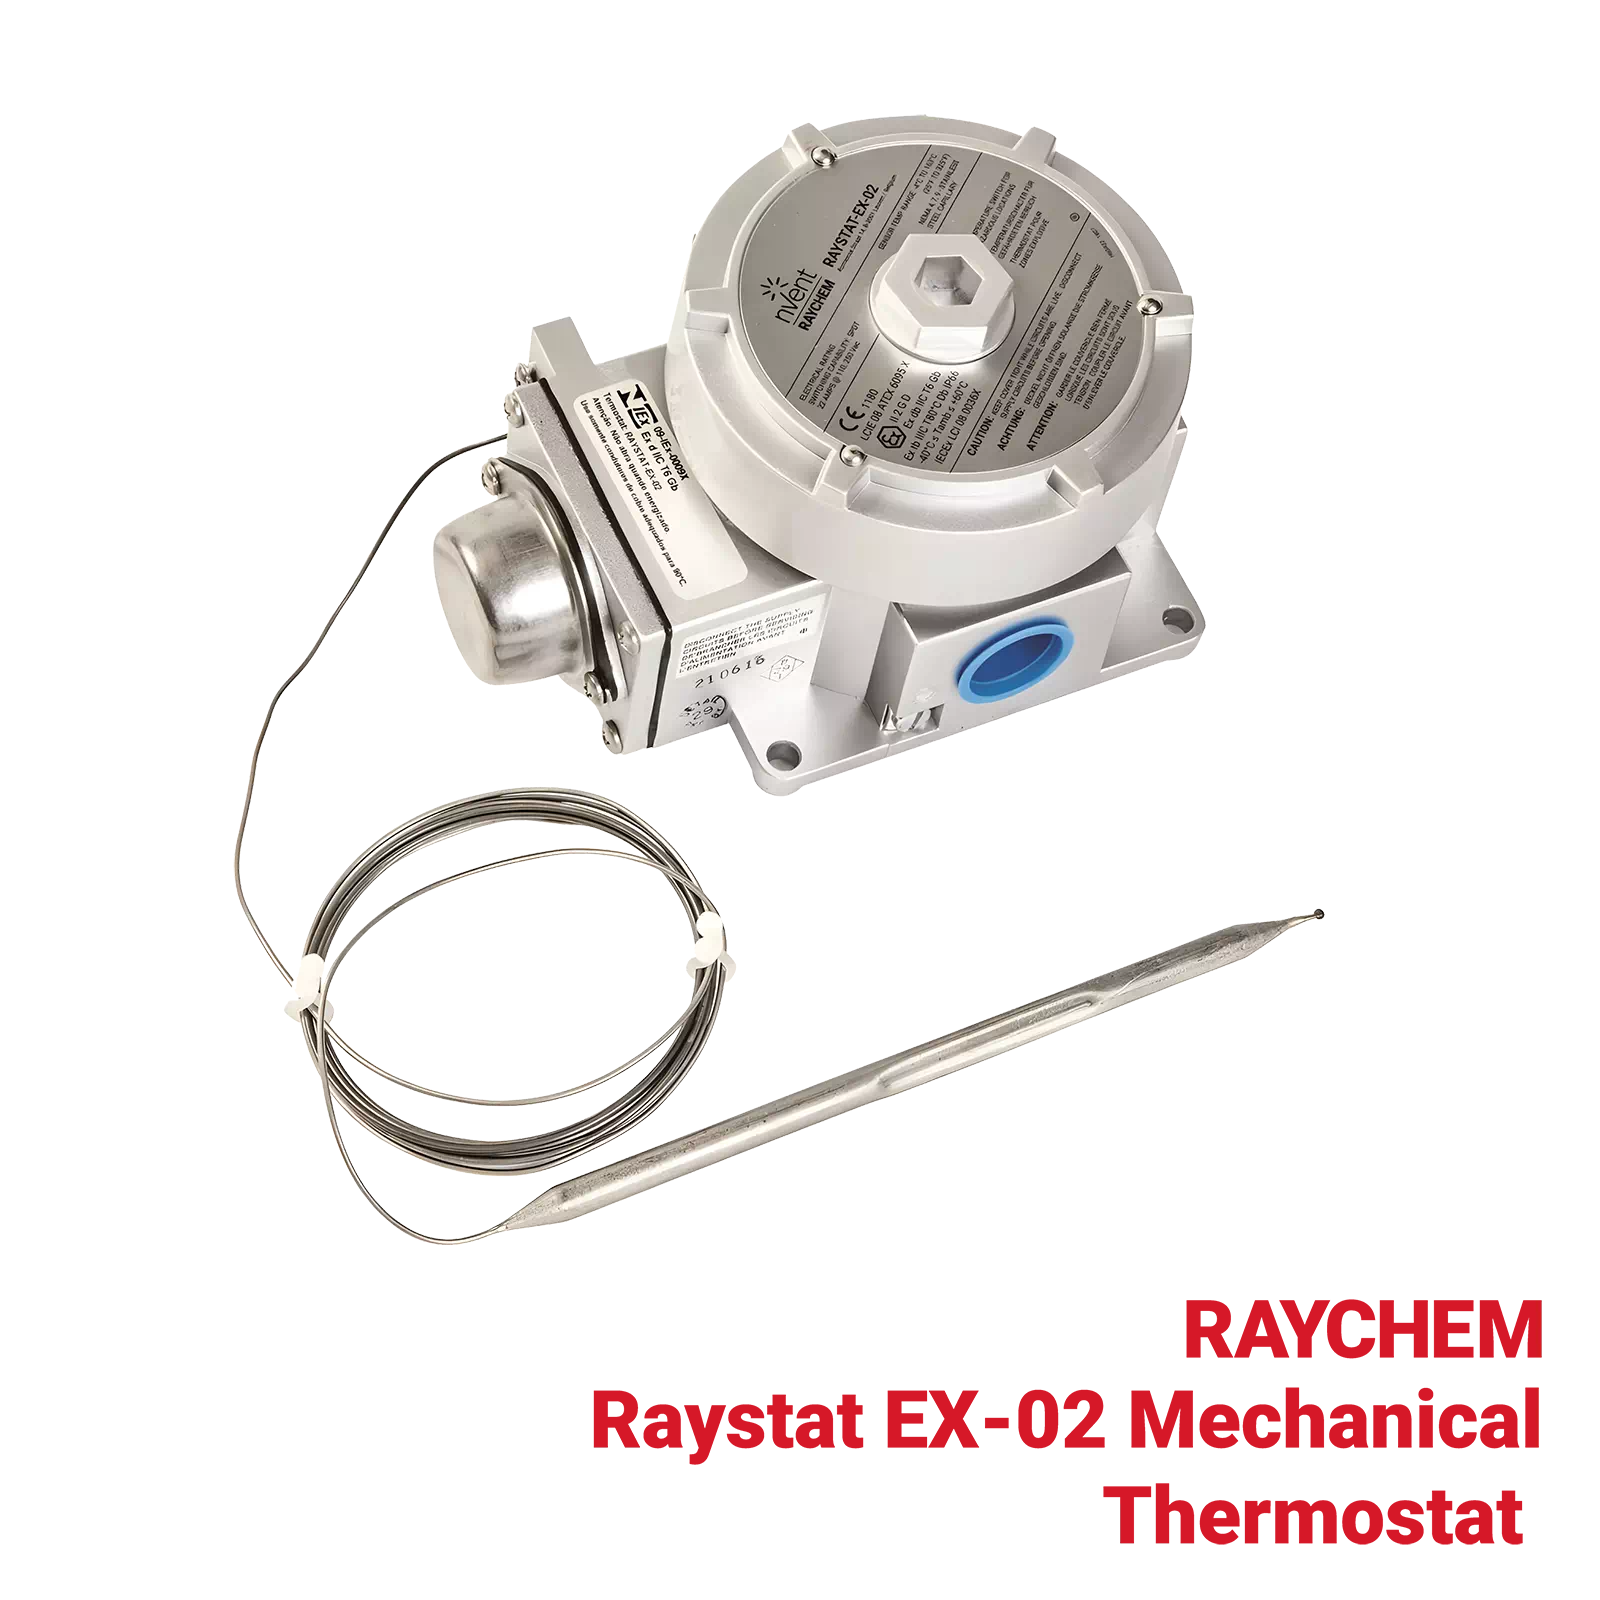 Raystat-EX-02-Mechanical-Thermostat-Raychem-Industrial-Heating